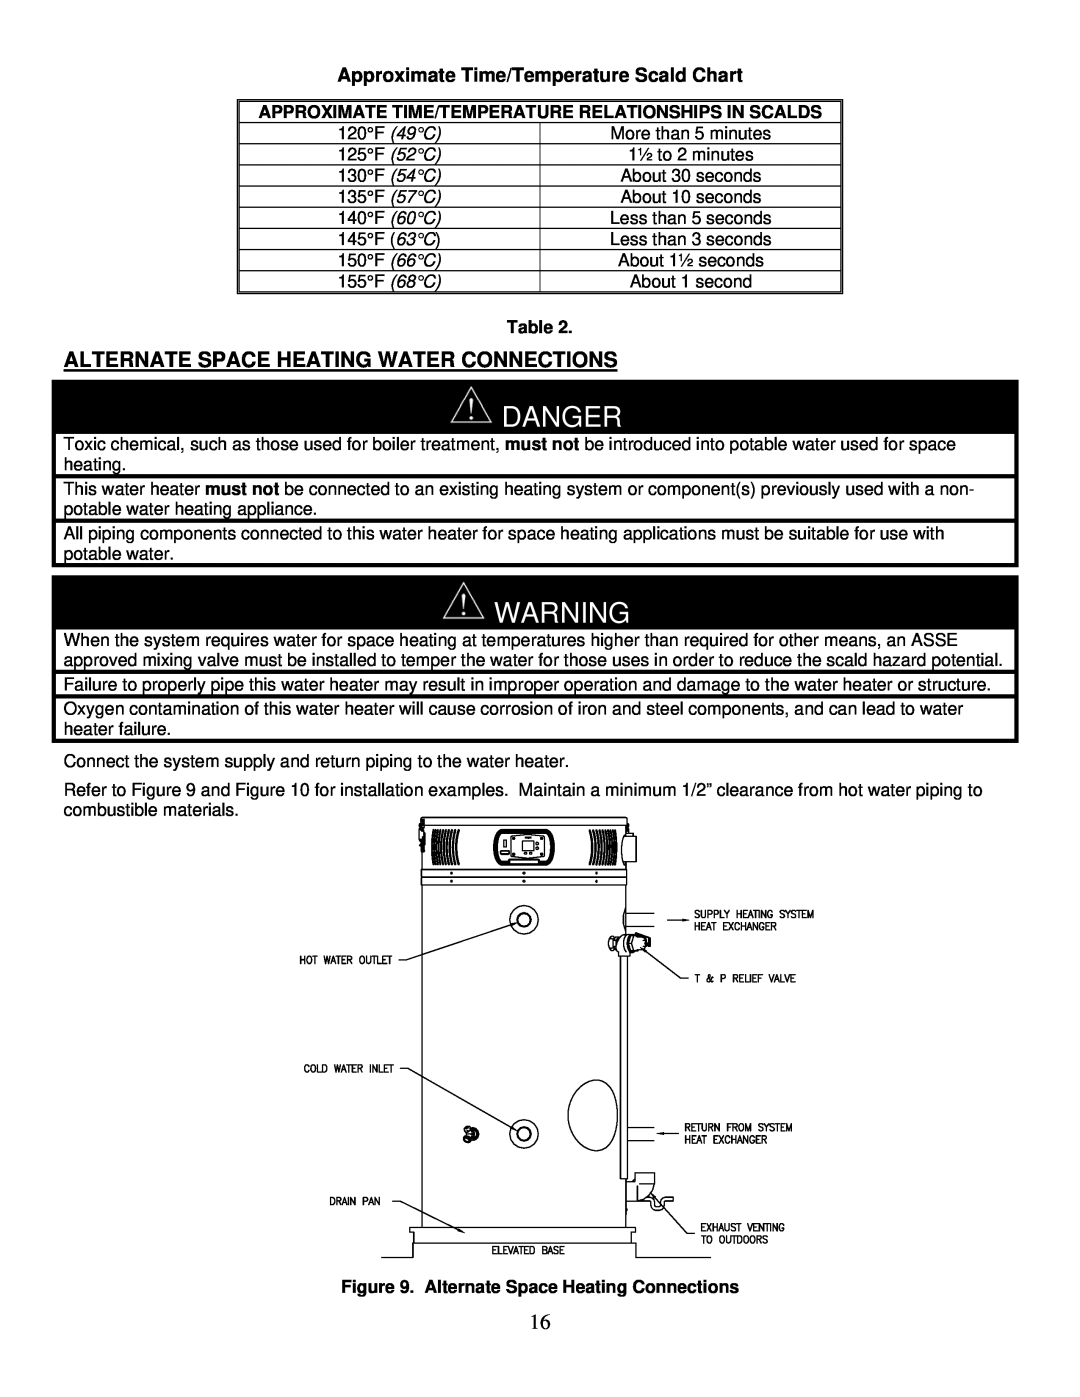 Bradford-White Corp 238-48384-00F Alternate Space Heating Water Connections, Danger, Alternate Space Heating Connections 